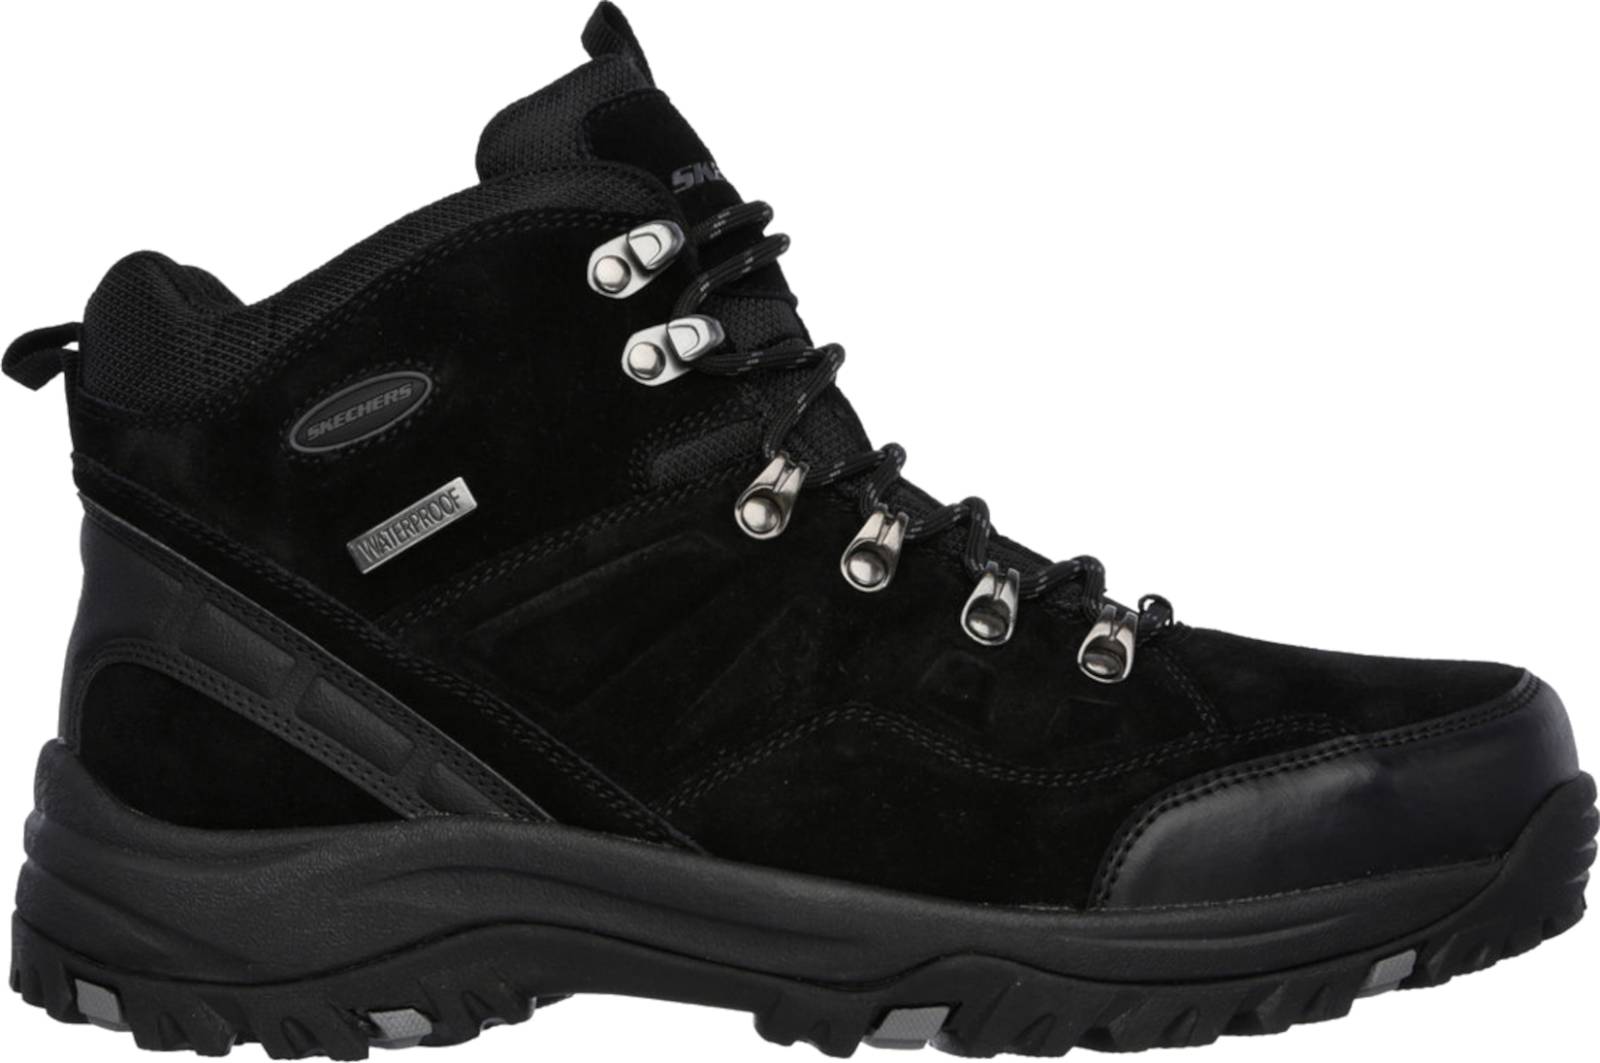 skechers waterproof boots women's